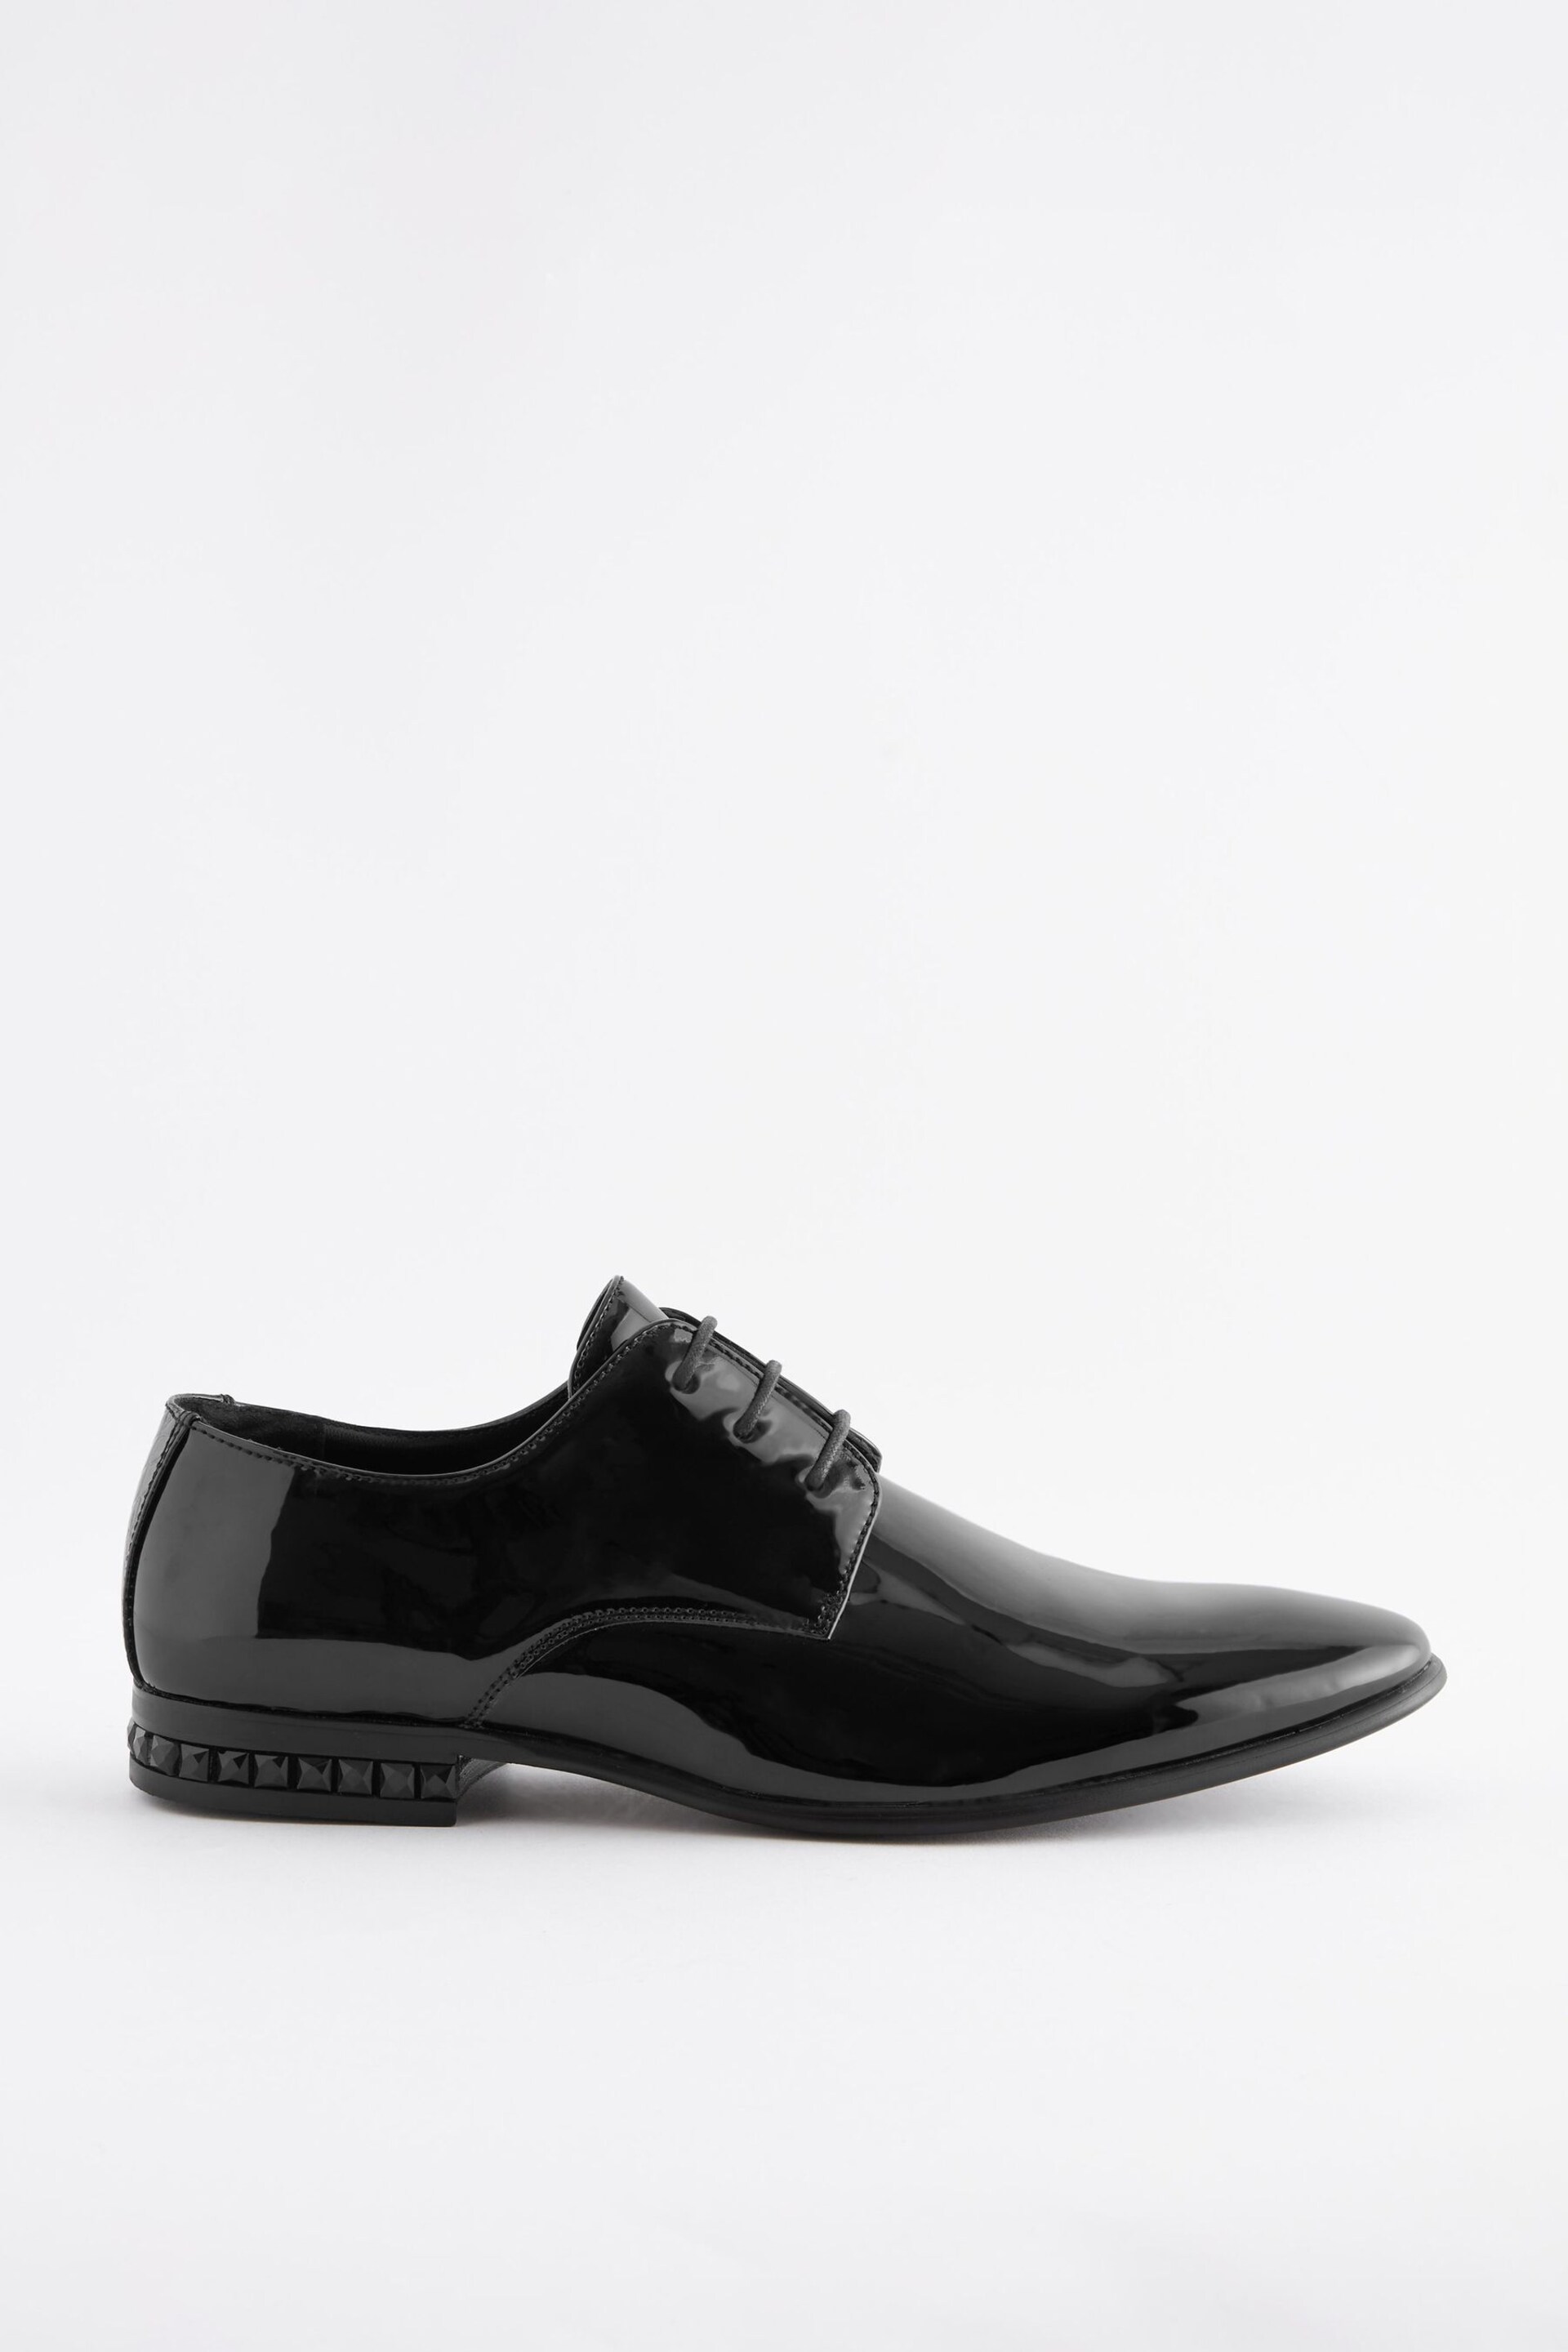 Black High Shine Jewel Trim Patent Derby Shoes - Image 2 of 5